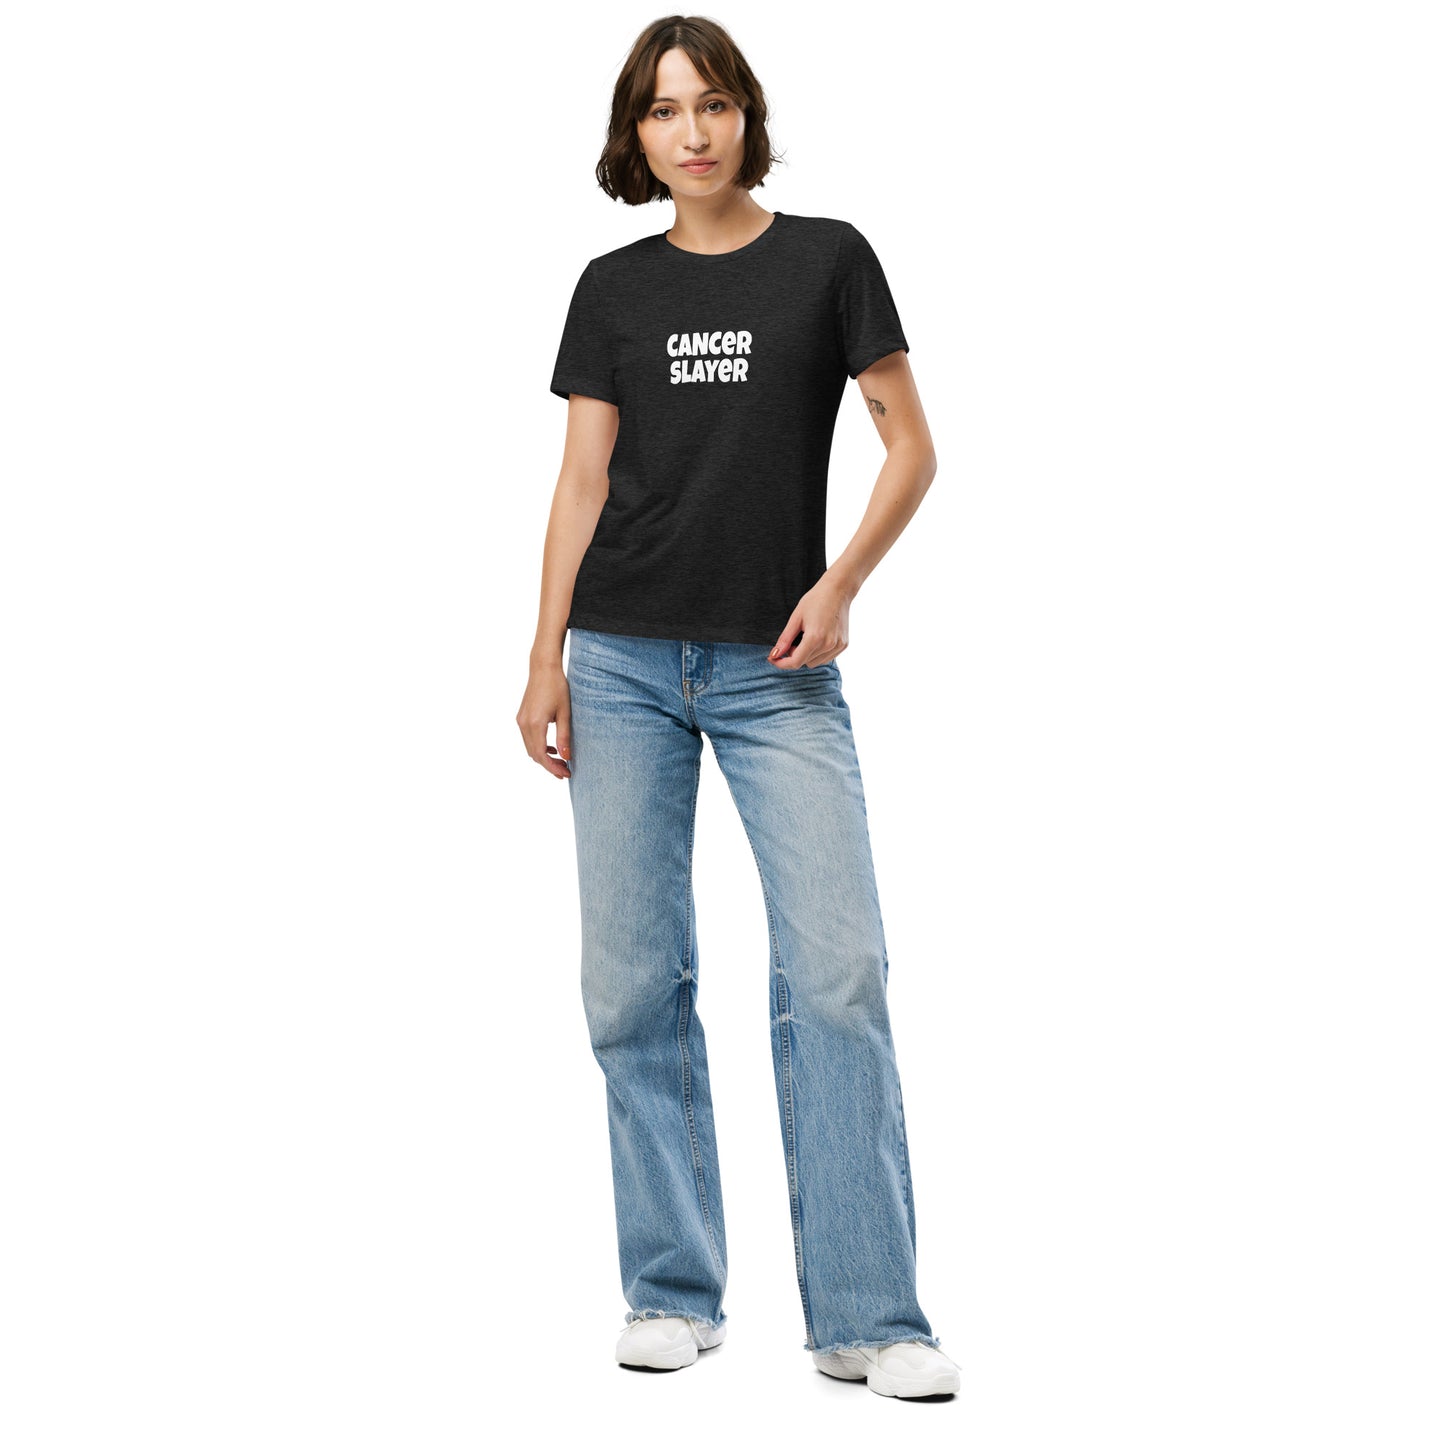 Cancer Slayer Premium Tri-Blend Relaxed Women's Short Sleeve T-shirt Dark